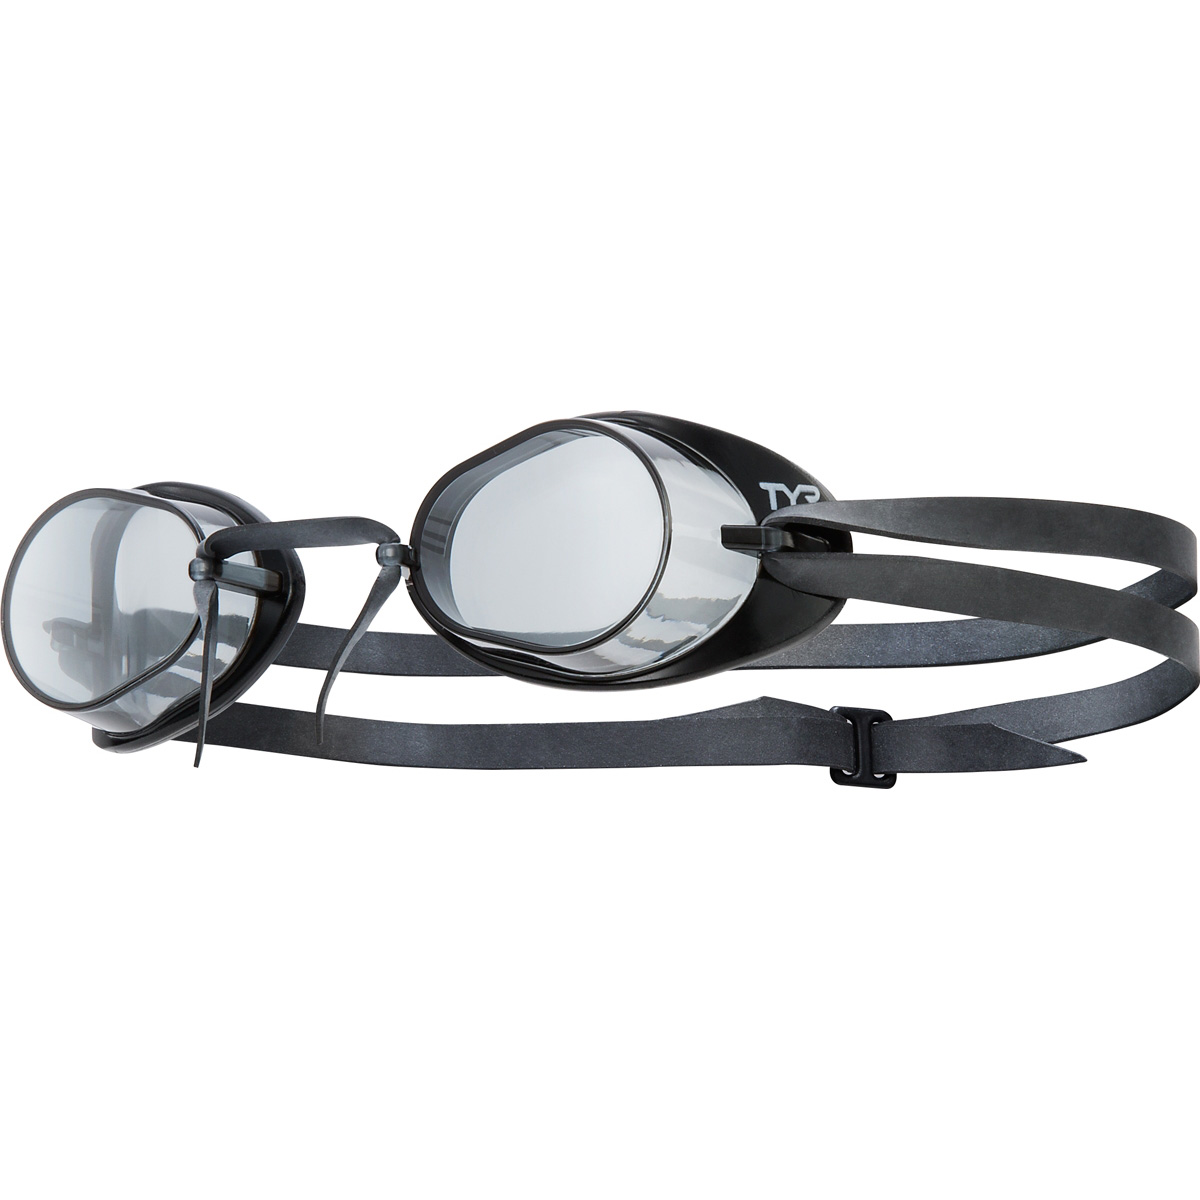 Productfoto van TYR Socket Rockets 2.0 Adult Fit Swimming Goggles - smoke/black/black